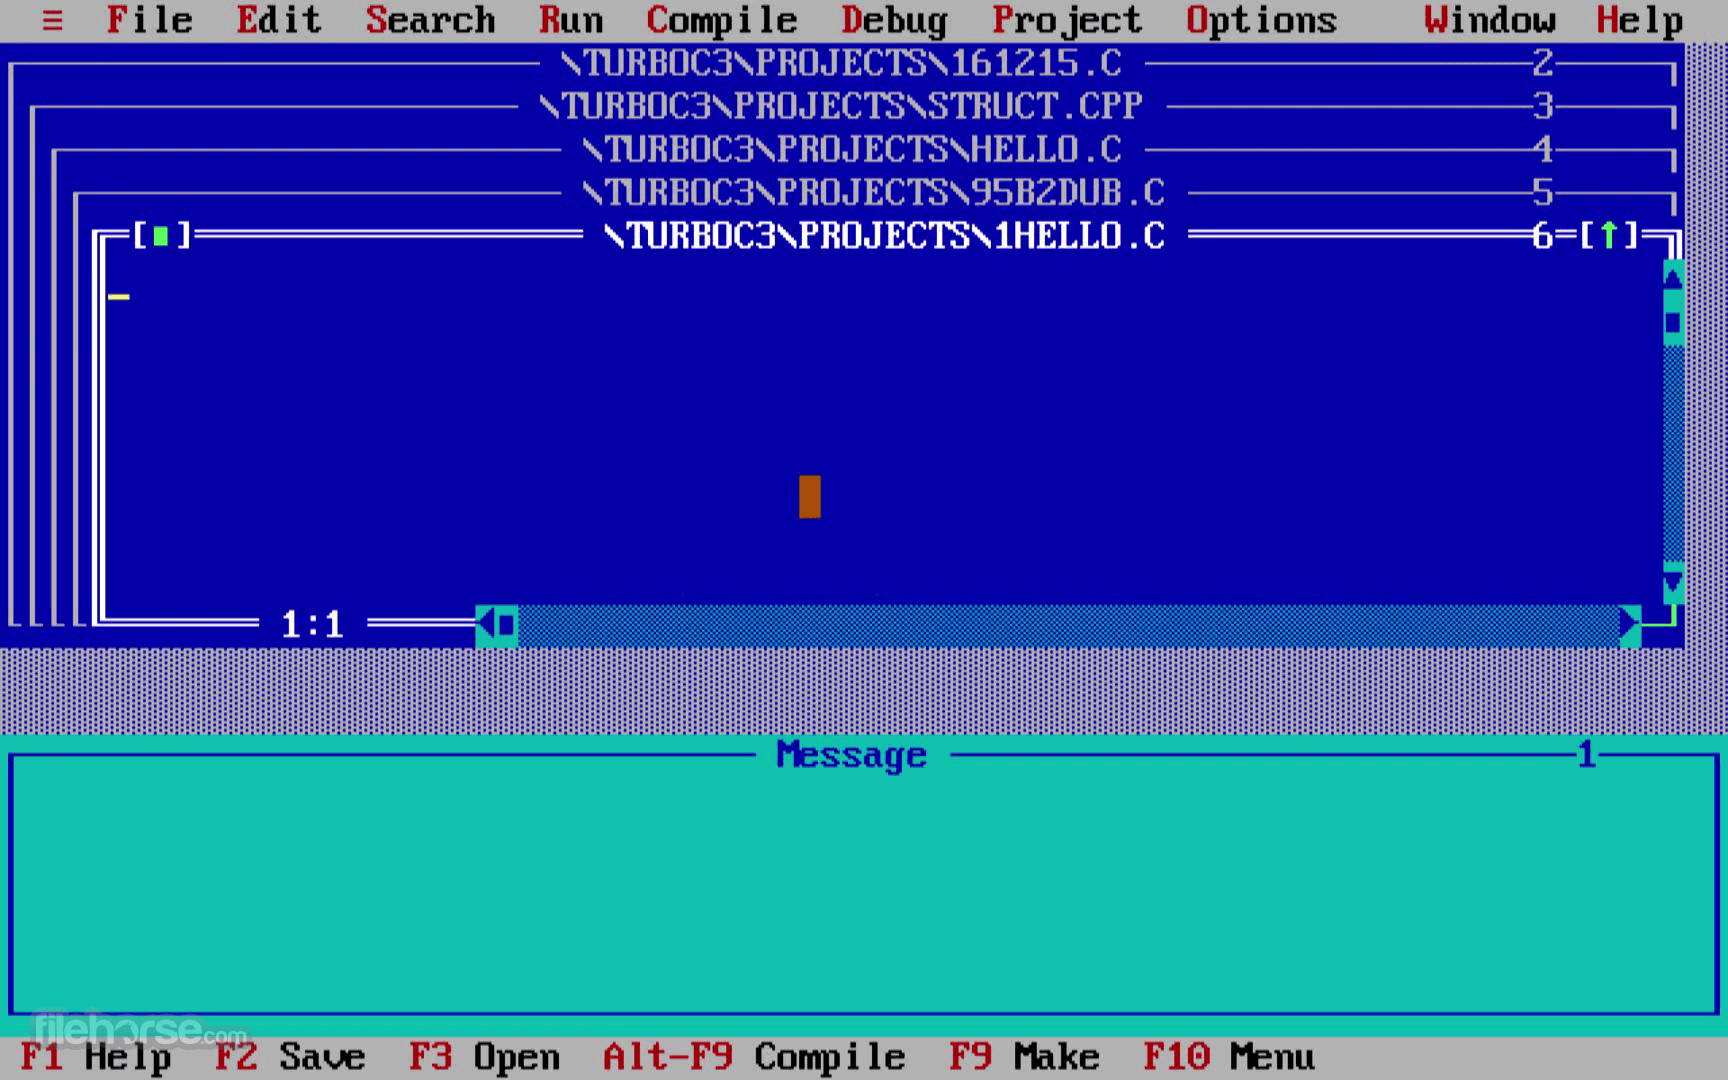 Download Turbo C++ Developer Tools For Windows